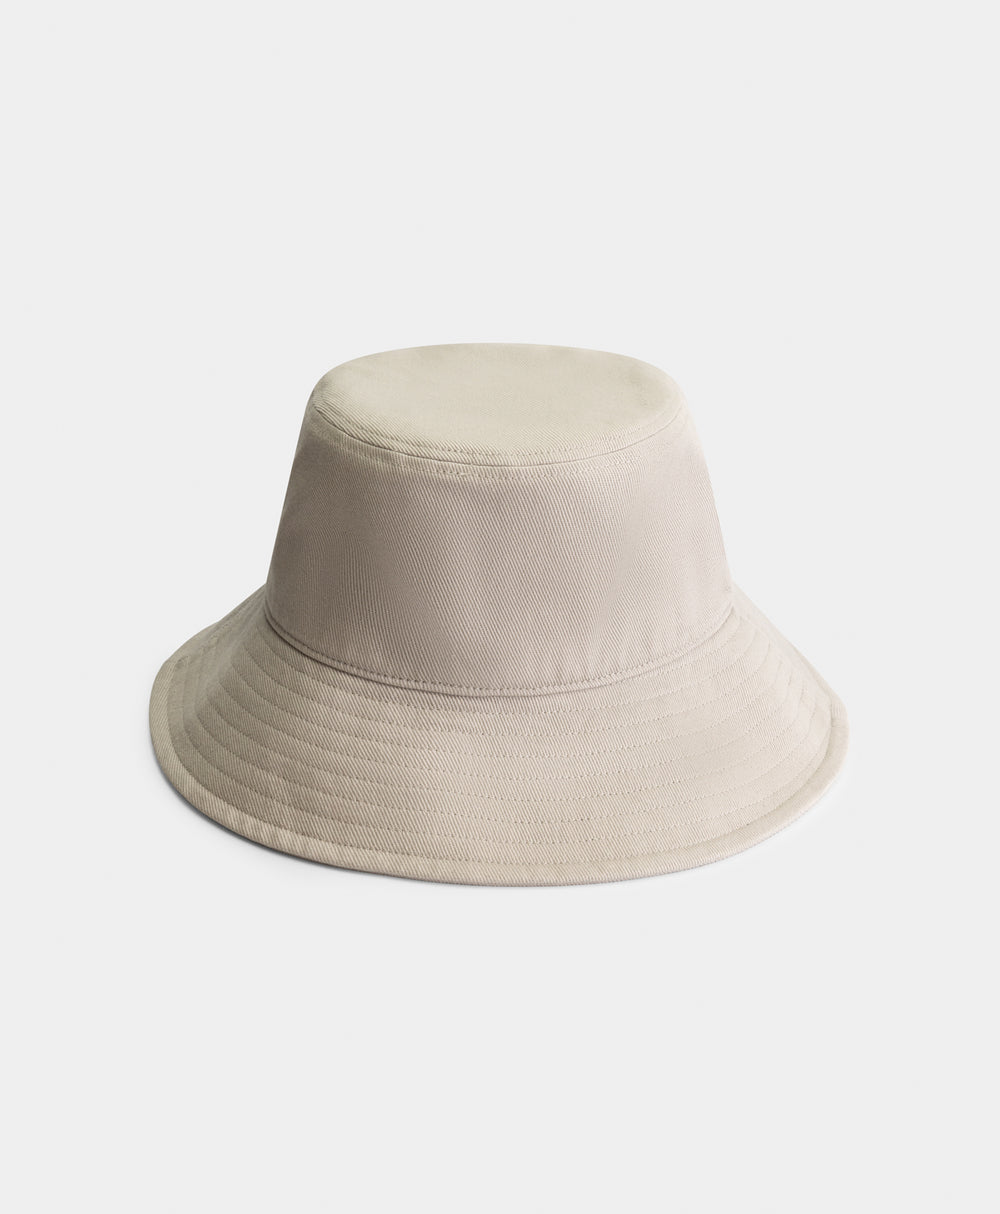 DP - Moonstruck Grey Niu Bucket Hat - Packshot - Rear